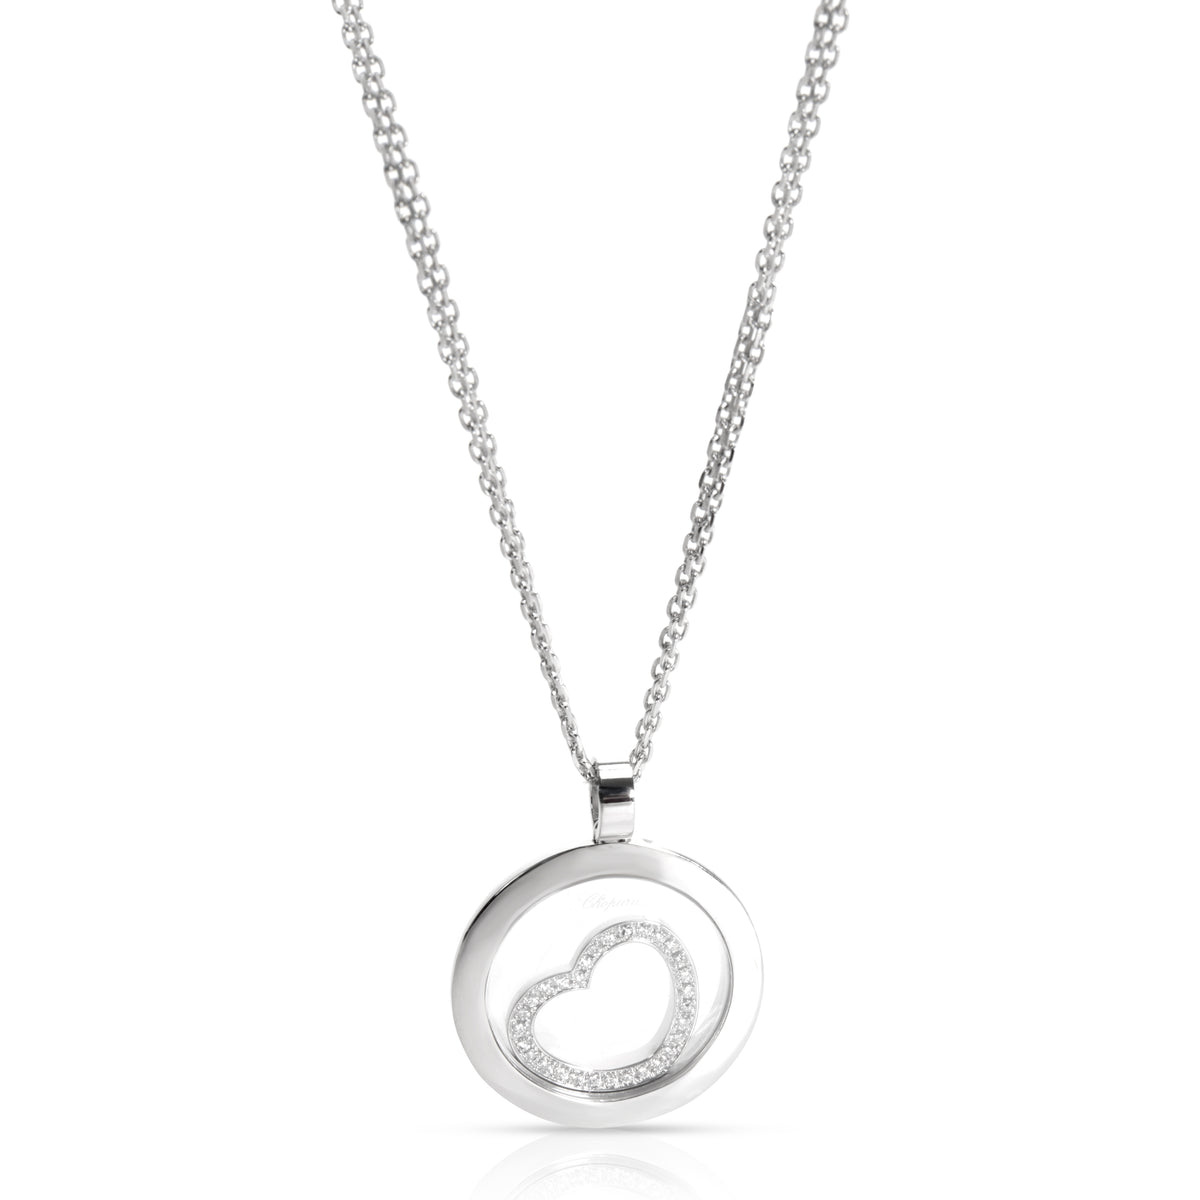 Chopard Happy Spirit Diamond Heart Necklace in 18K White Gold 0.33 CTW